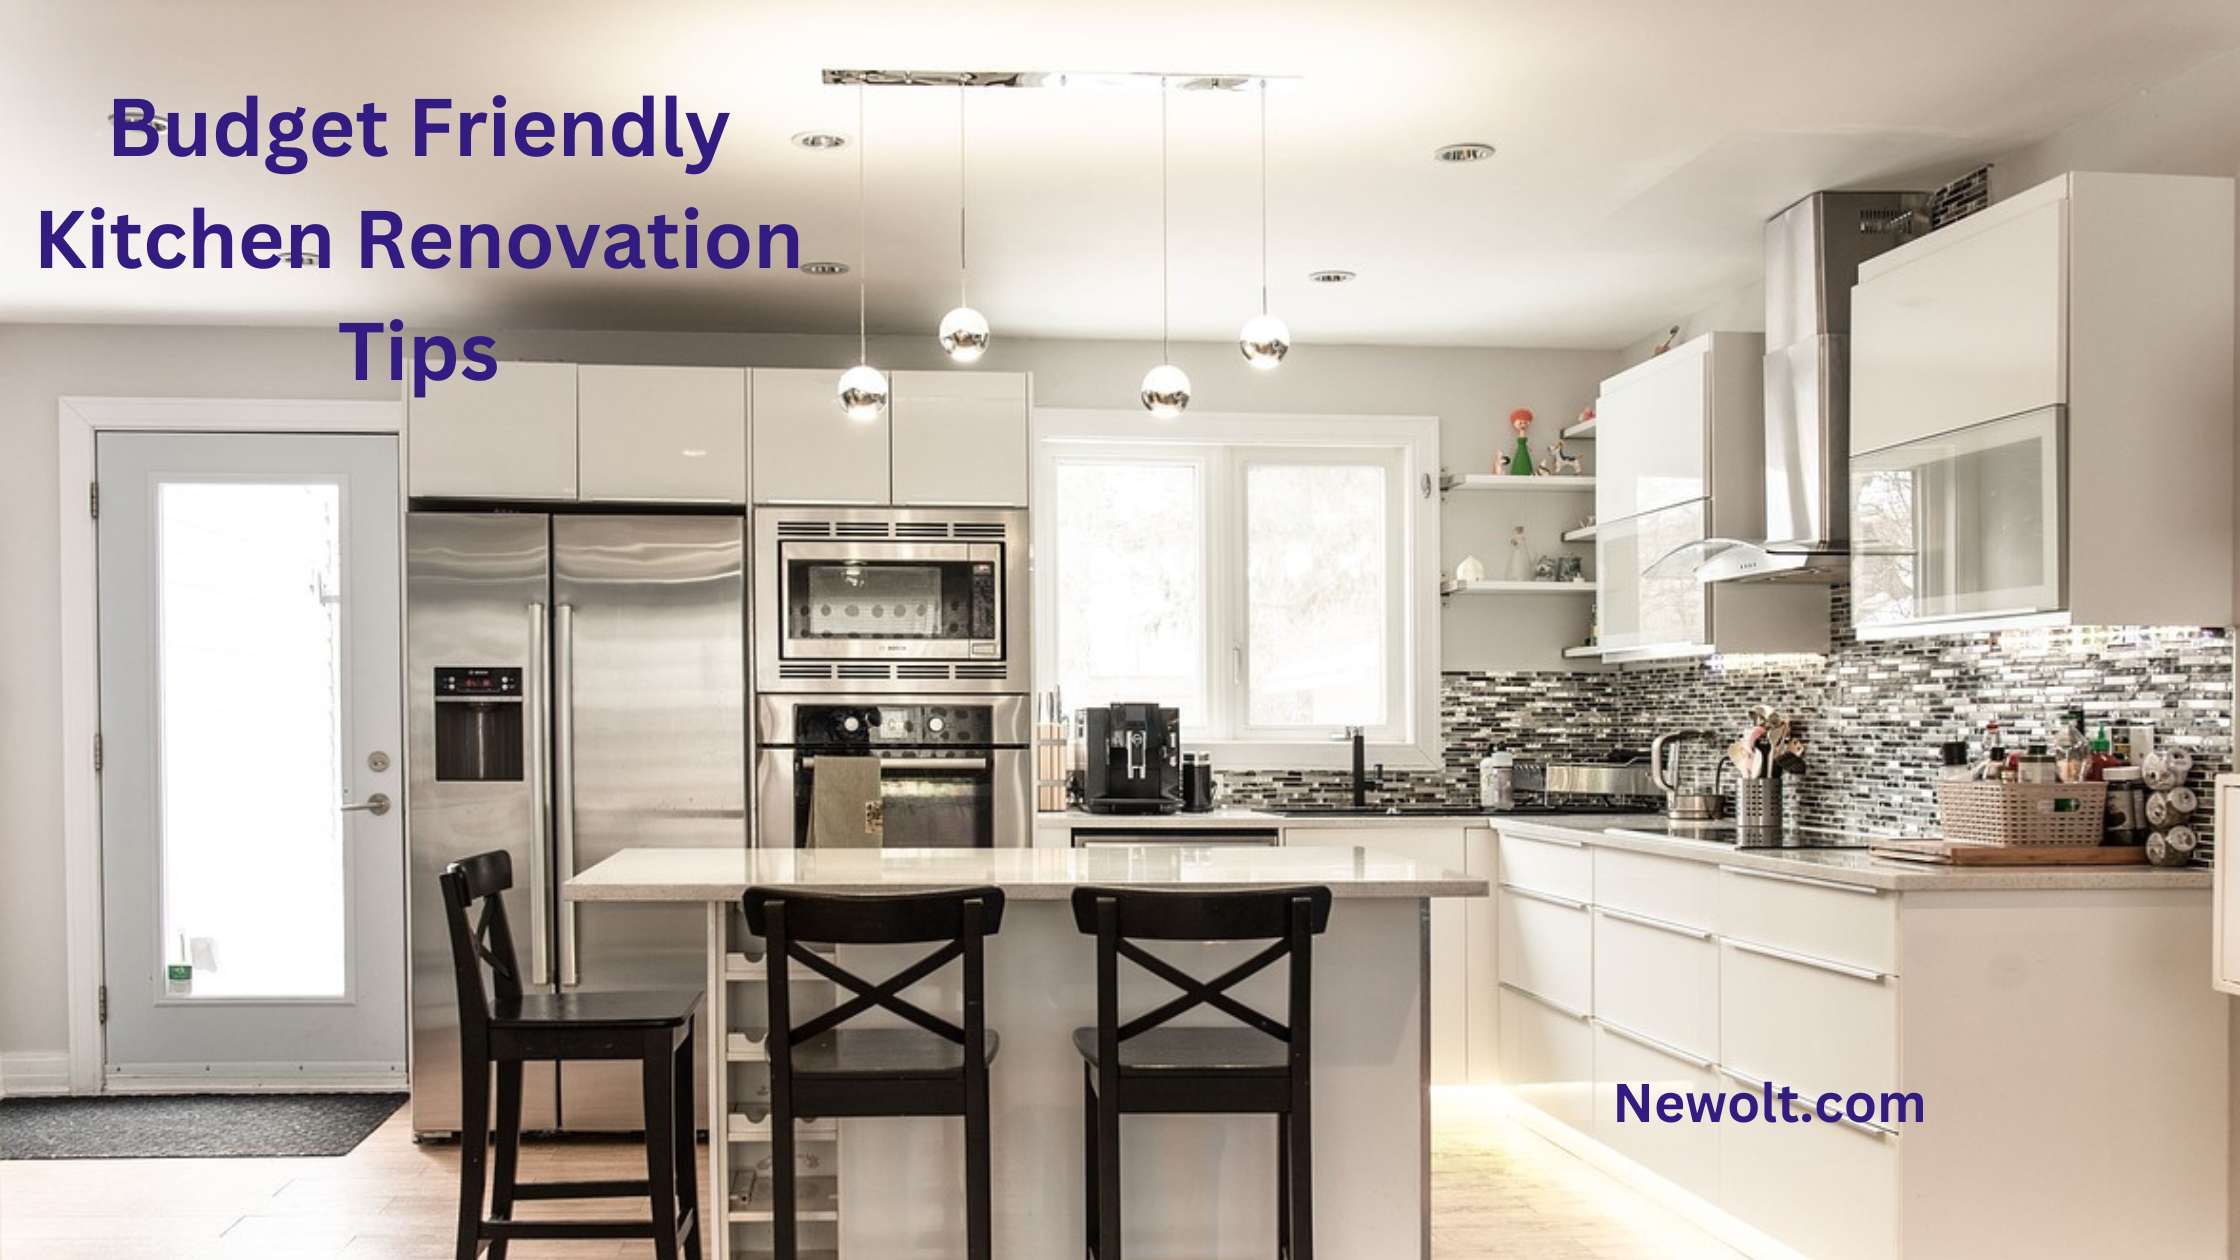 Budget Friendly Kitchen Renovation Tips for Home Improvement